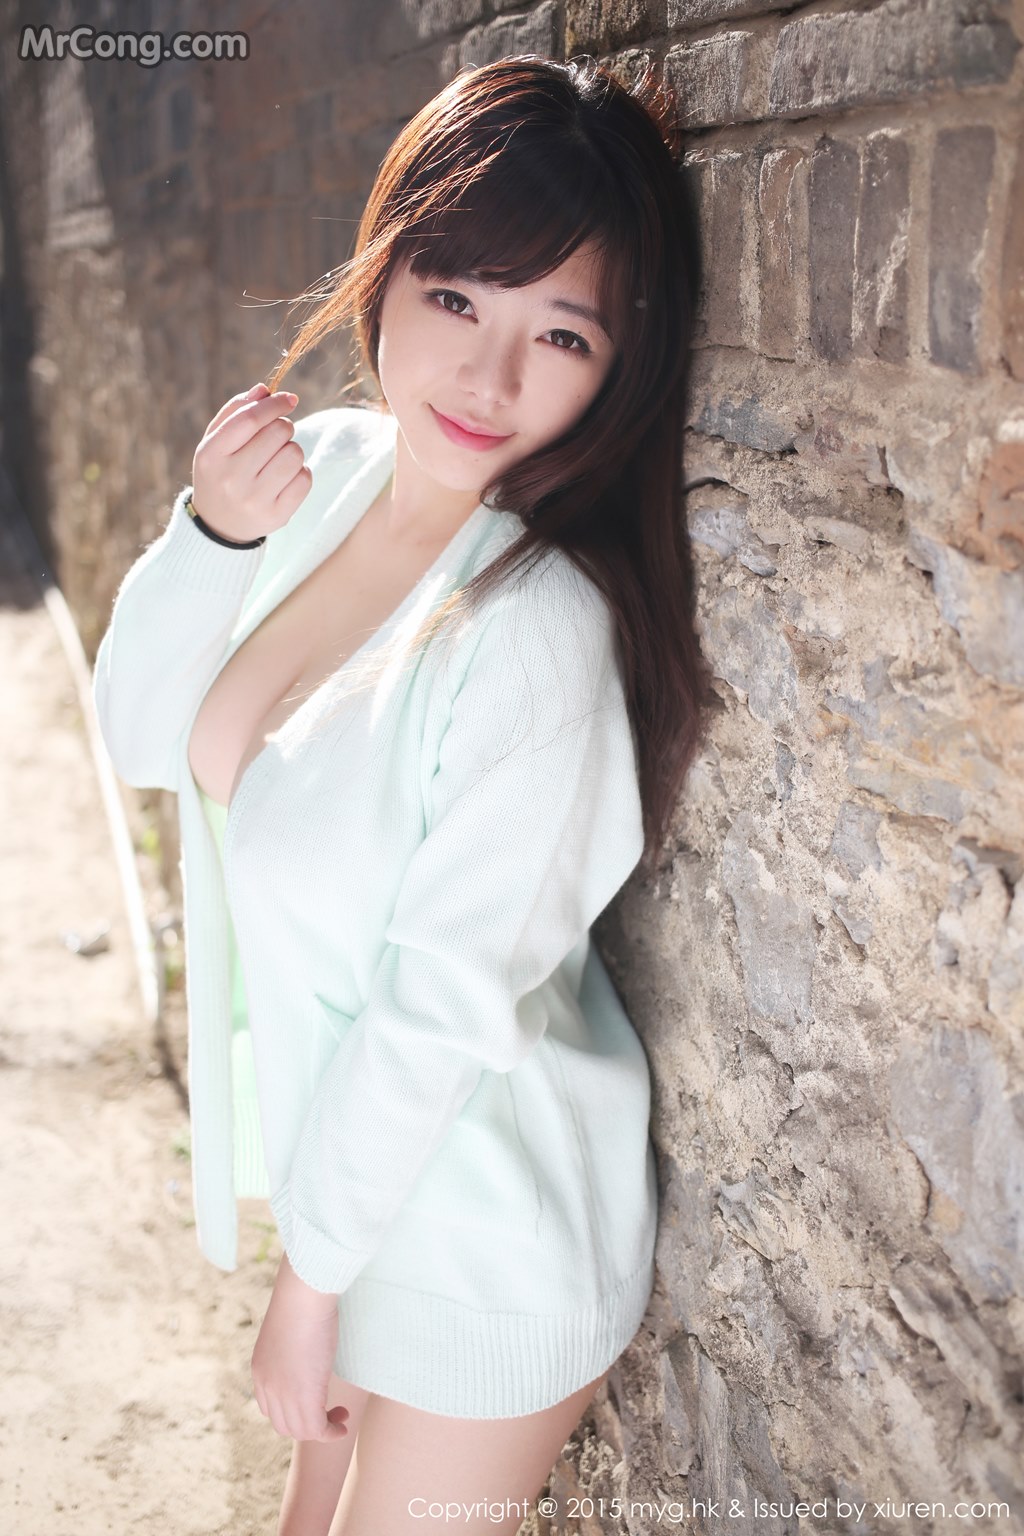 MyGirl Vol.115: Faye Model (刘 飞儿) (60 photos)